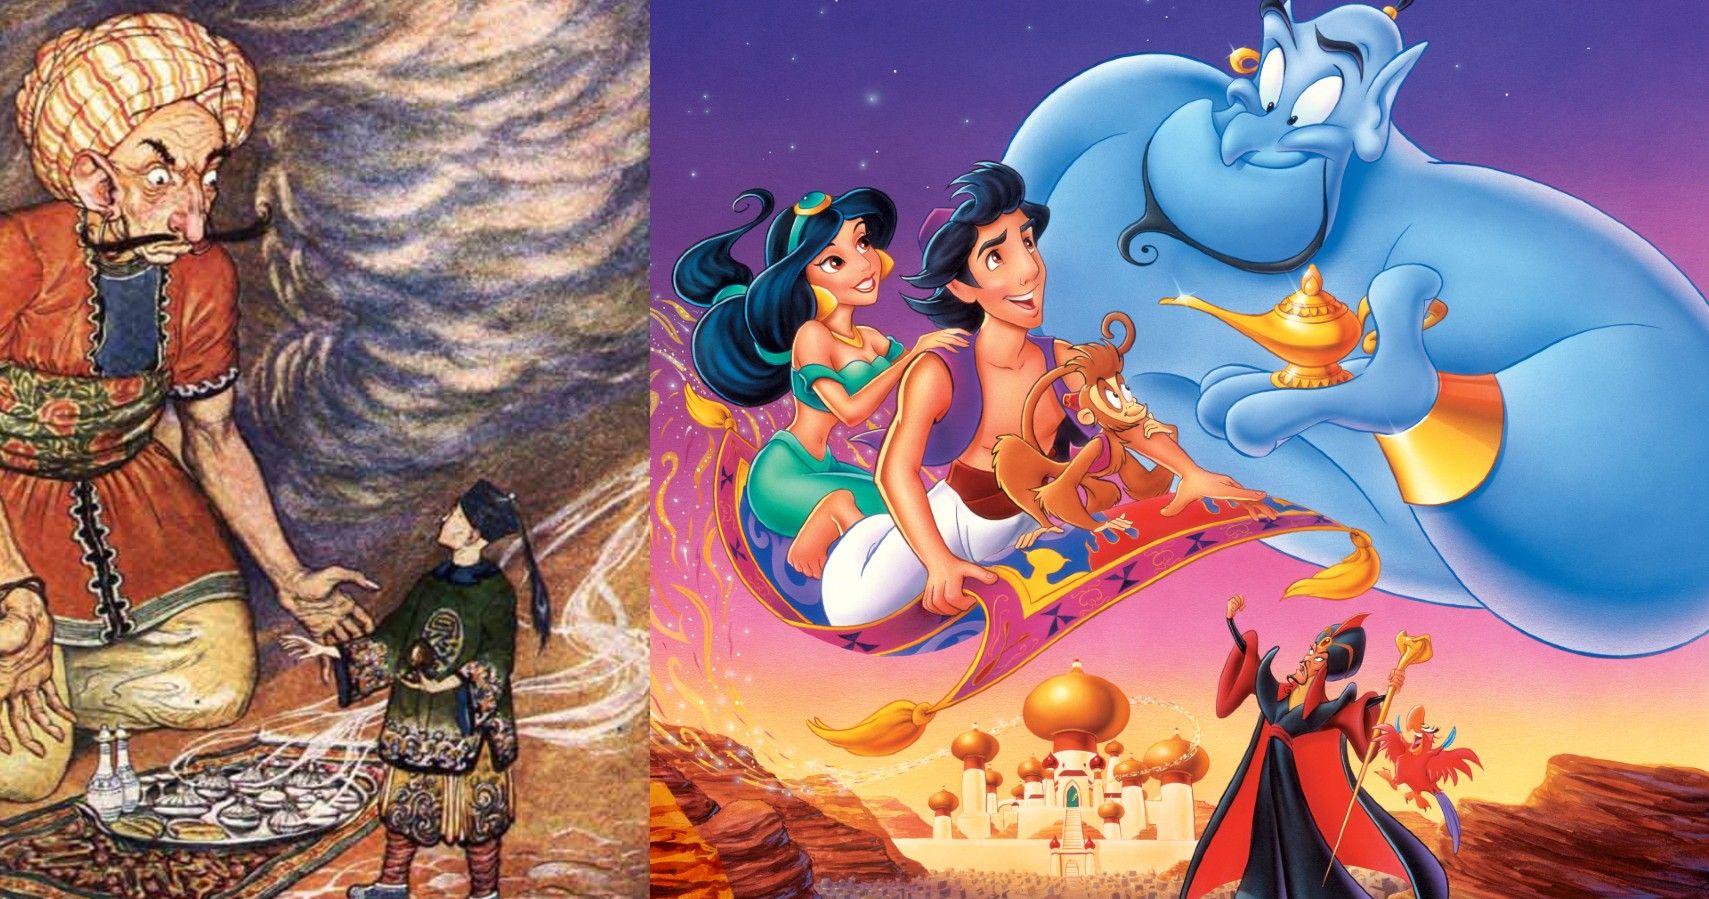 https://static1.srcdn.com/wordpress/wp-content/uploads/2020/05/Aladdin-Disney-Folk-Tale-Differences-Feature-Image.jpg